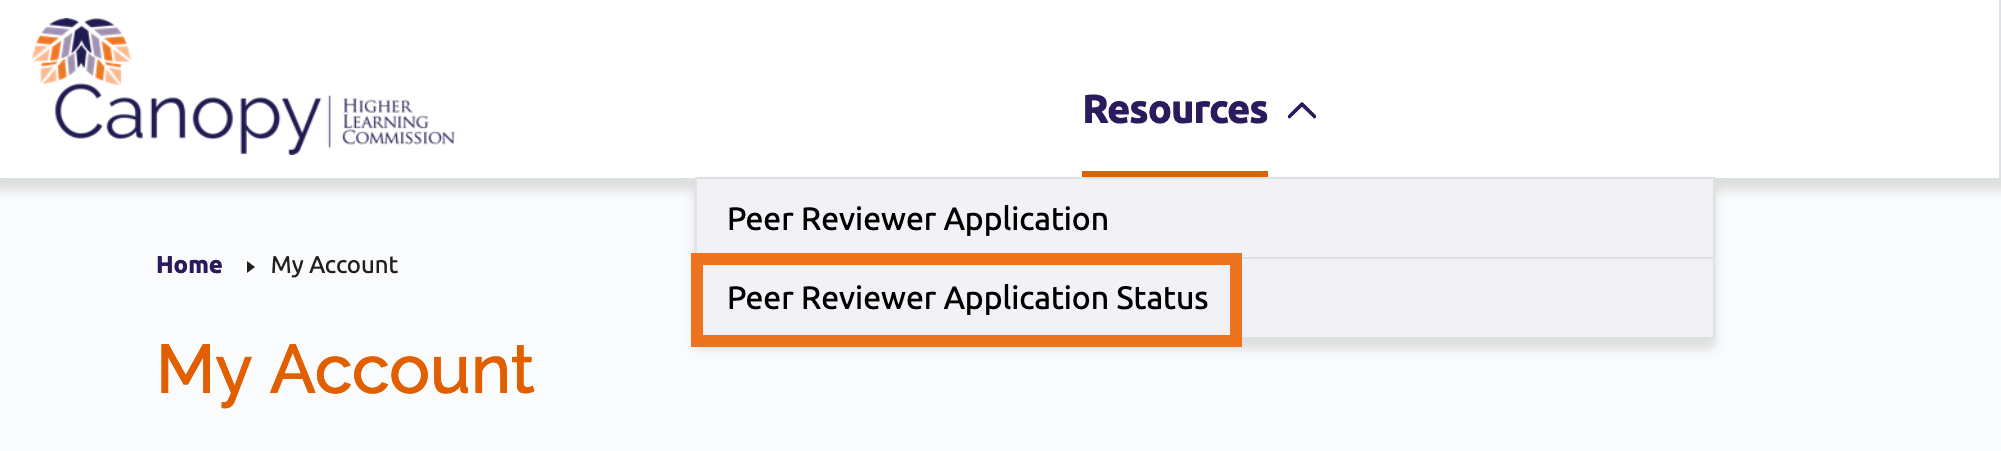 Peer Reviewer Application Status menu